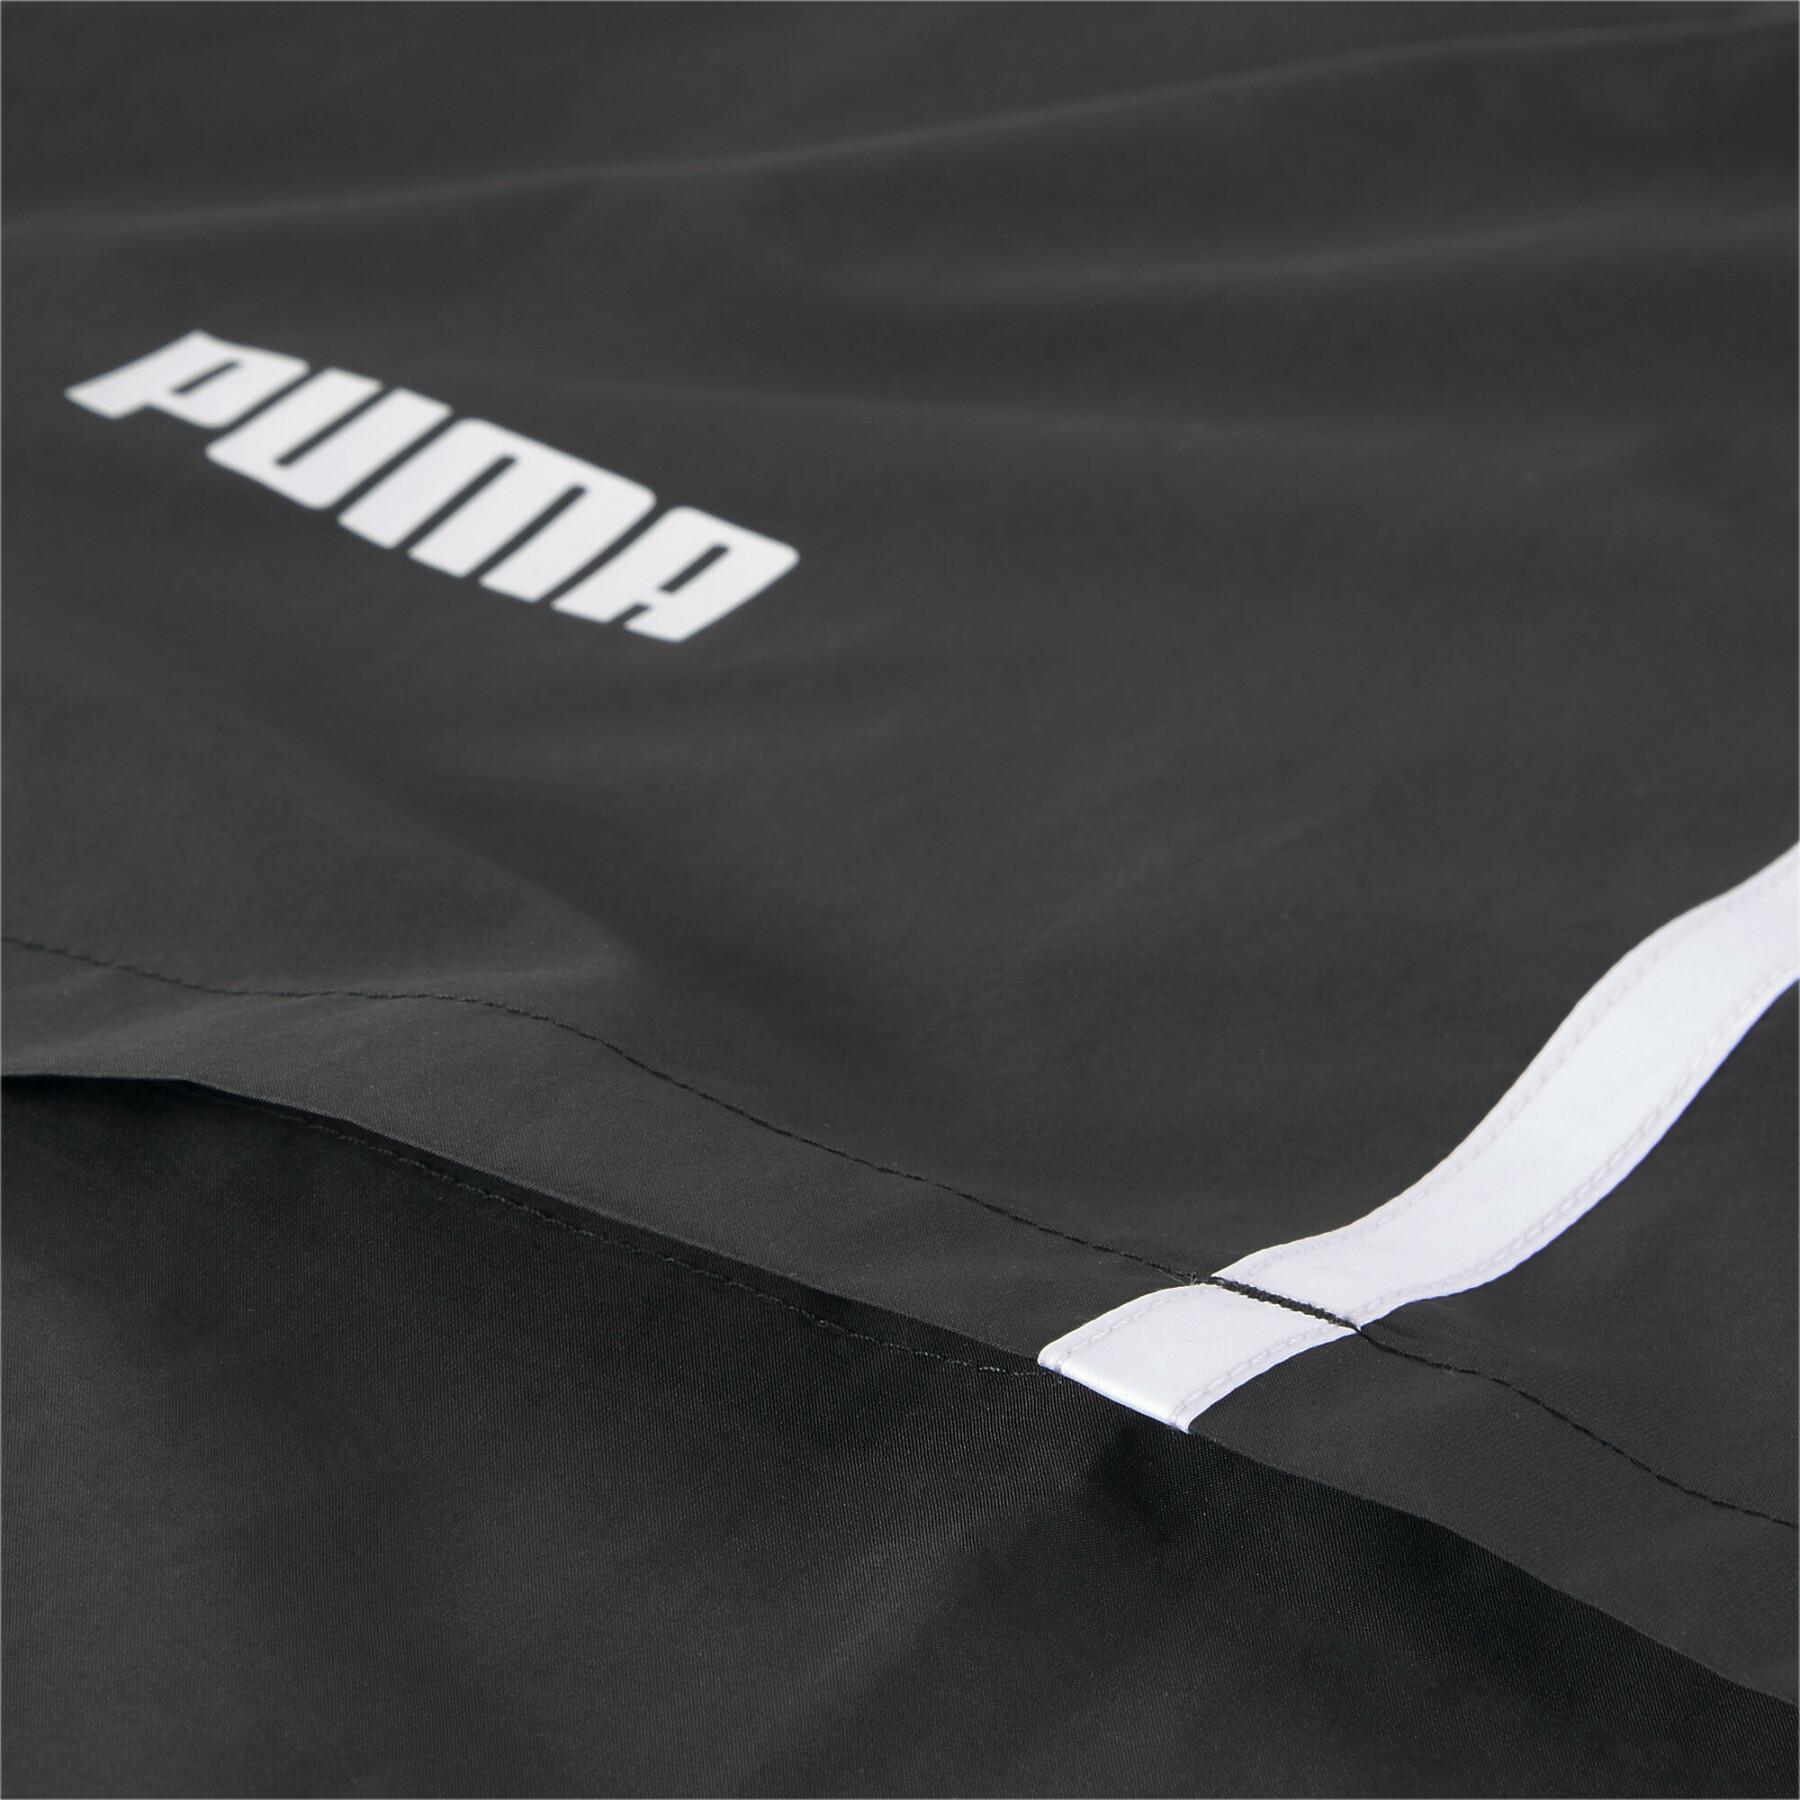 Waterproof jacket Puma ESS Solid